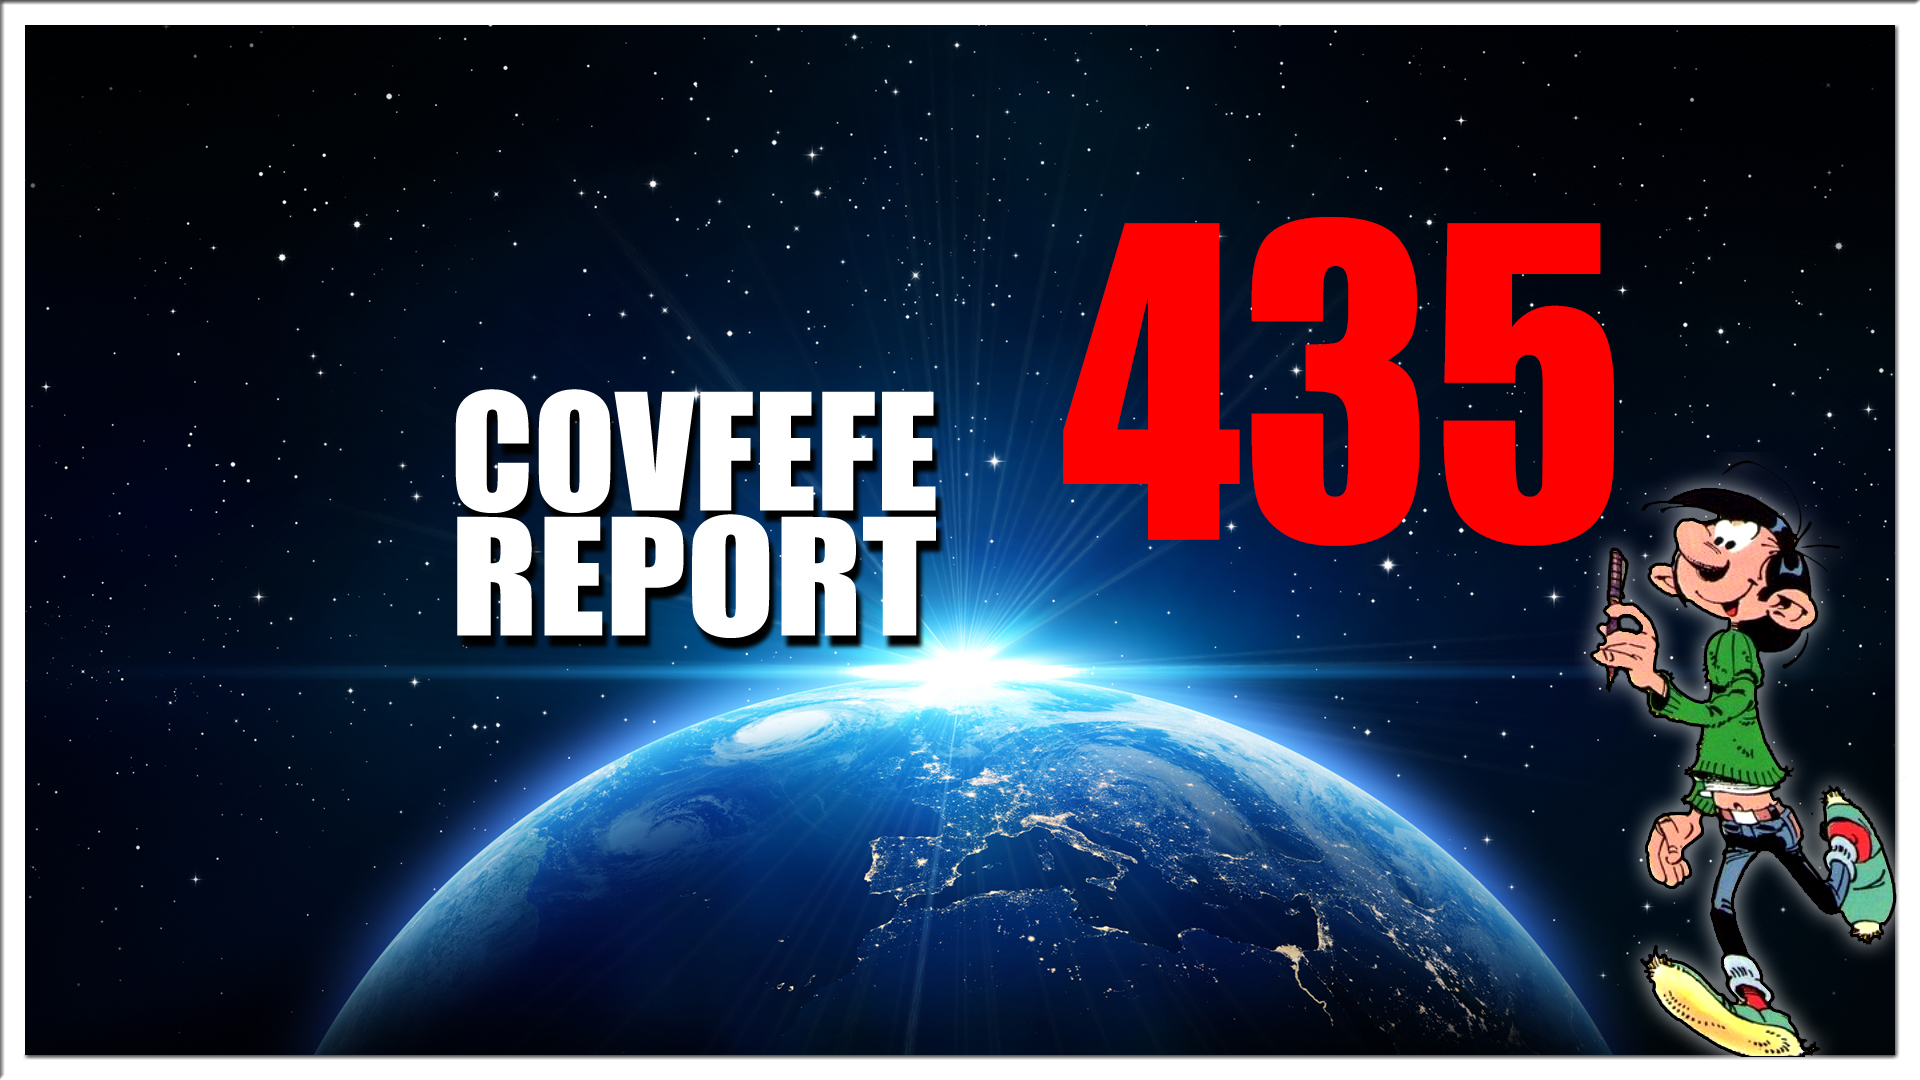 Covfefe Report 435. Real Raw News, We have a President, te veel priklokaties, DragBN'ers